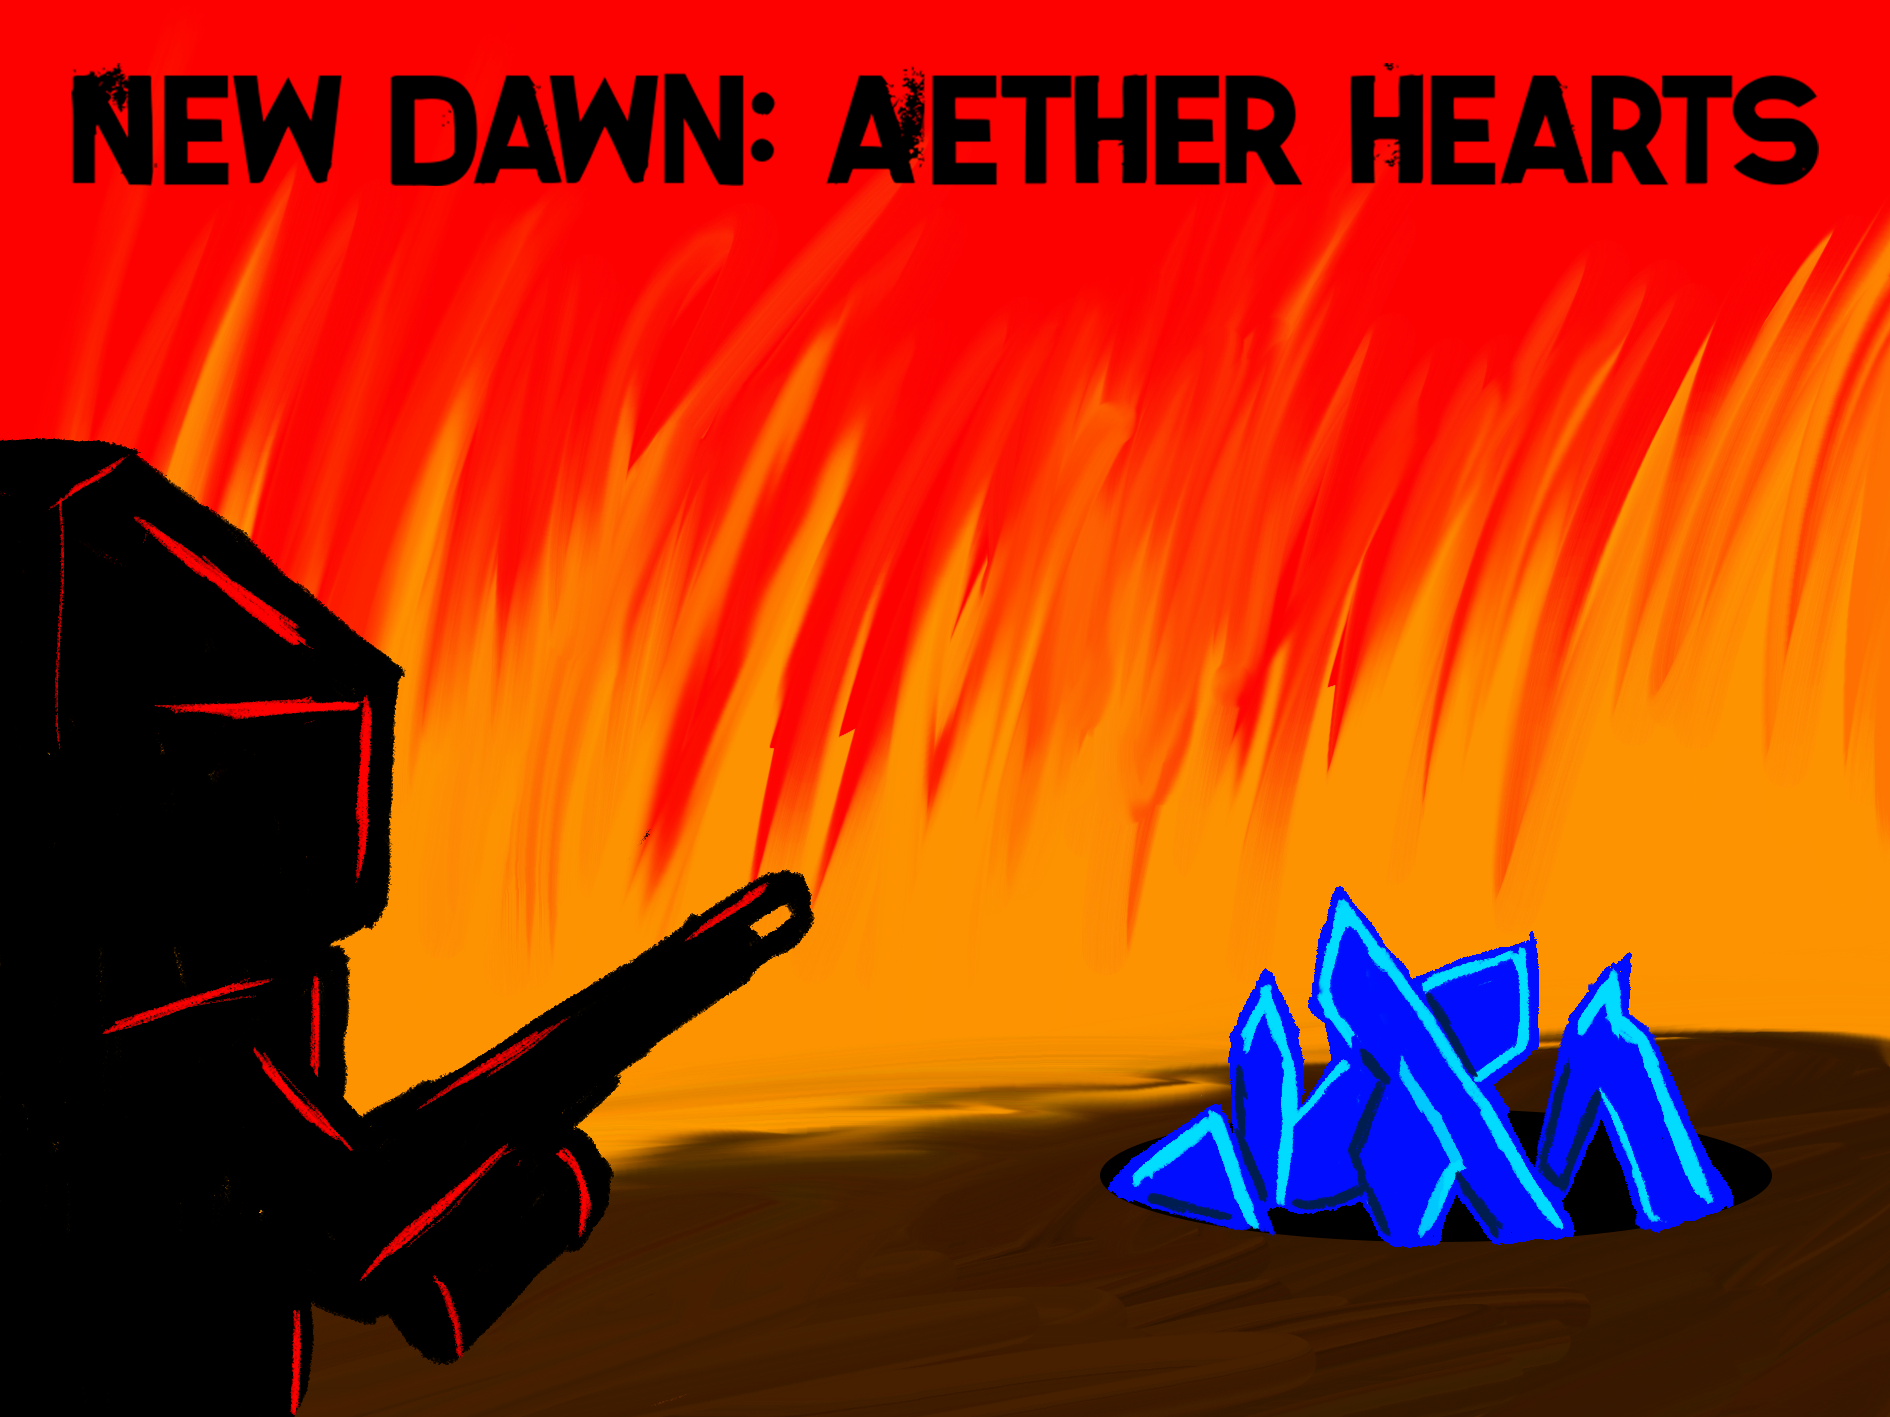 New Dawn: Aether Hearts